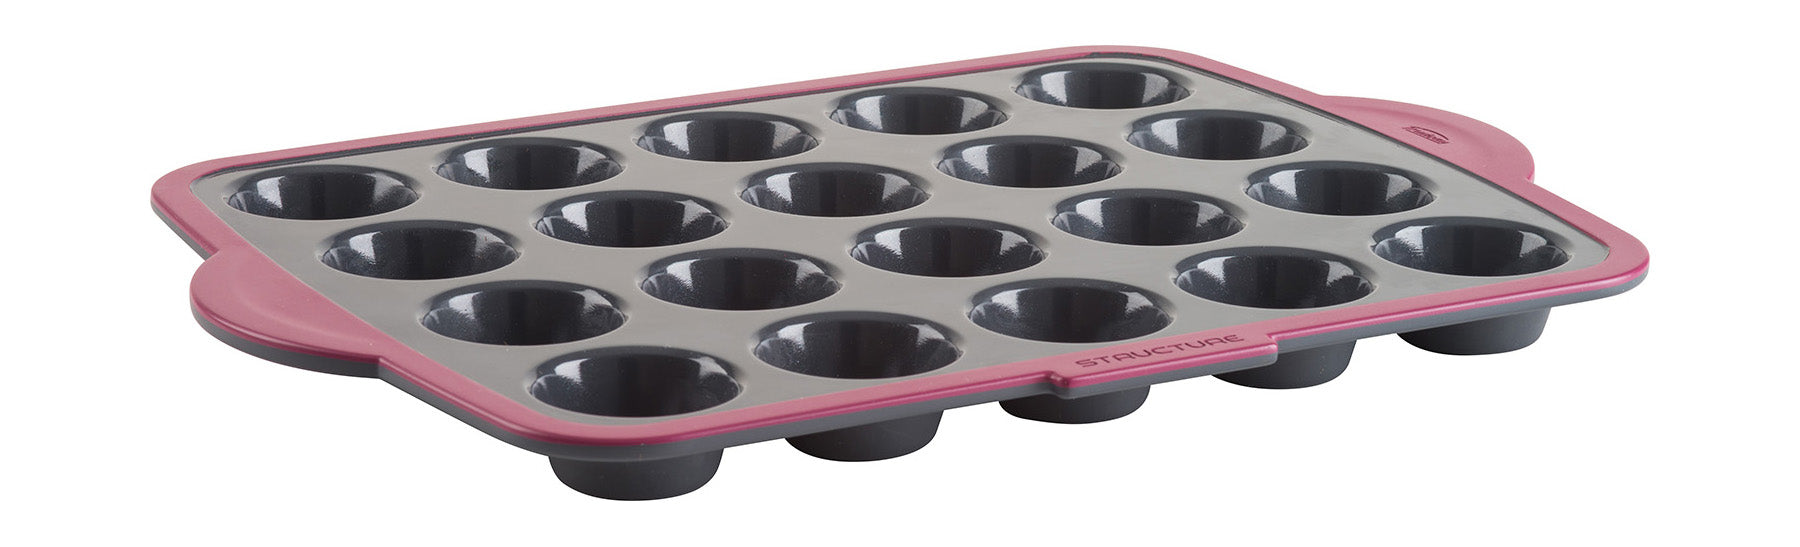 Trudeau Structure Silicone Pro 20 Cavity Mini Muffin Pan, Gray/Pink